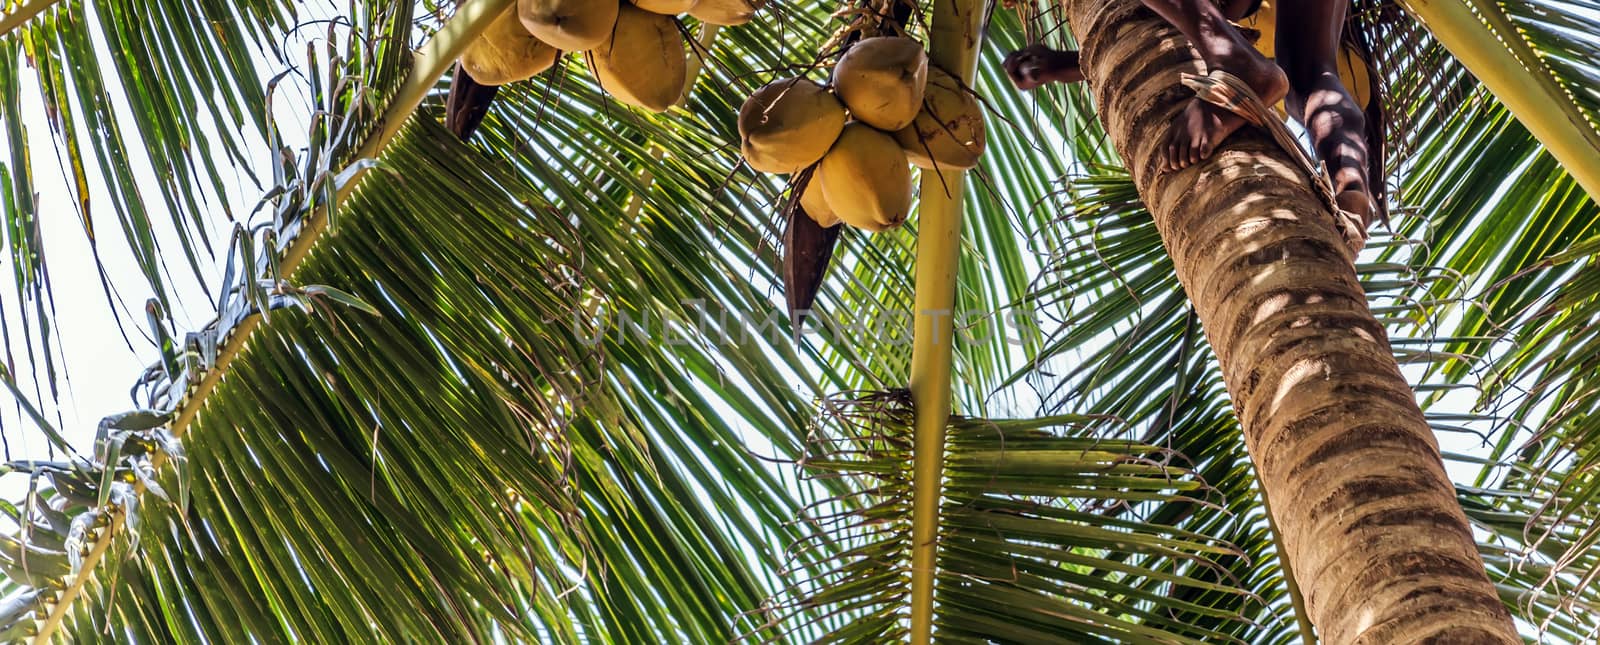 Sri Lanka Vegan organic Coconuts. King coconut palm (Cocos nucifera), coconuts on a tree silhouette background